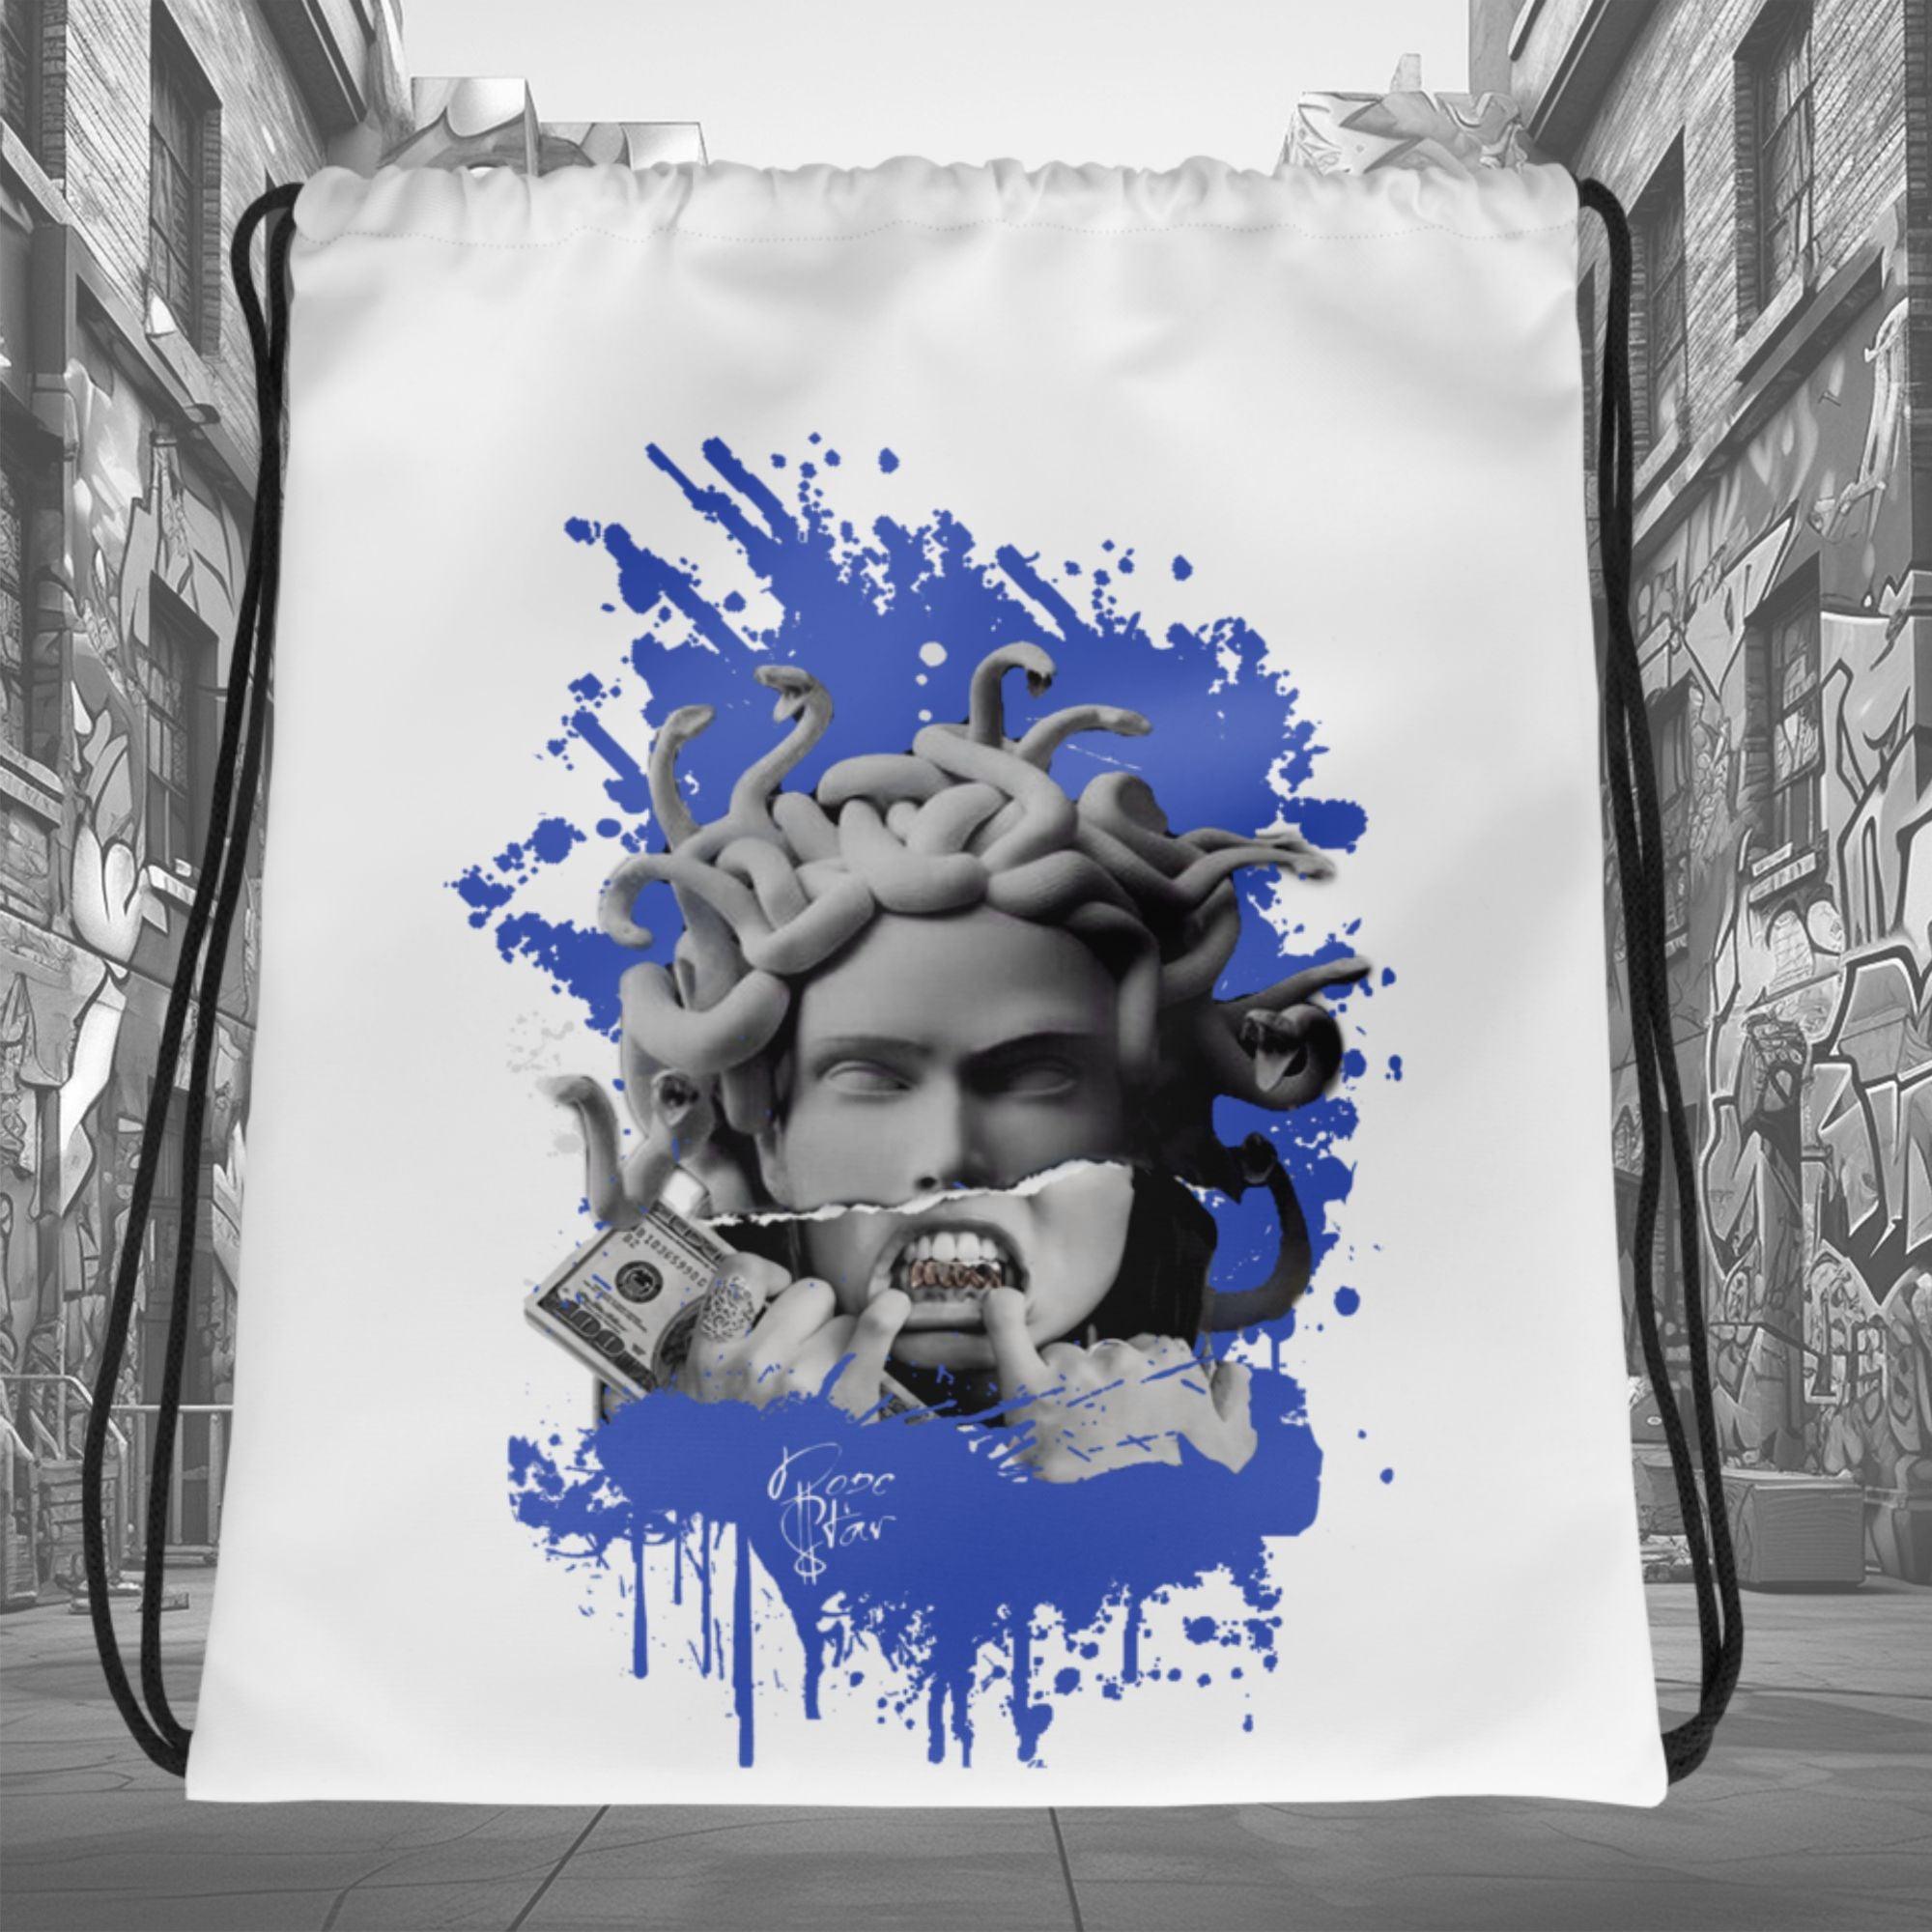 Amazing White MEDUSA Drawstring Bag Nike Dunk Disrupt 2 Hyper Royal photo.